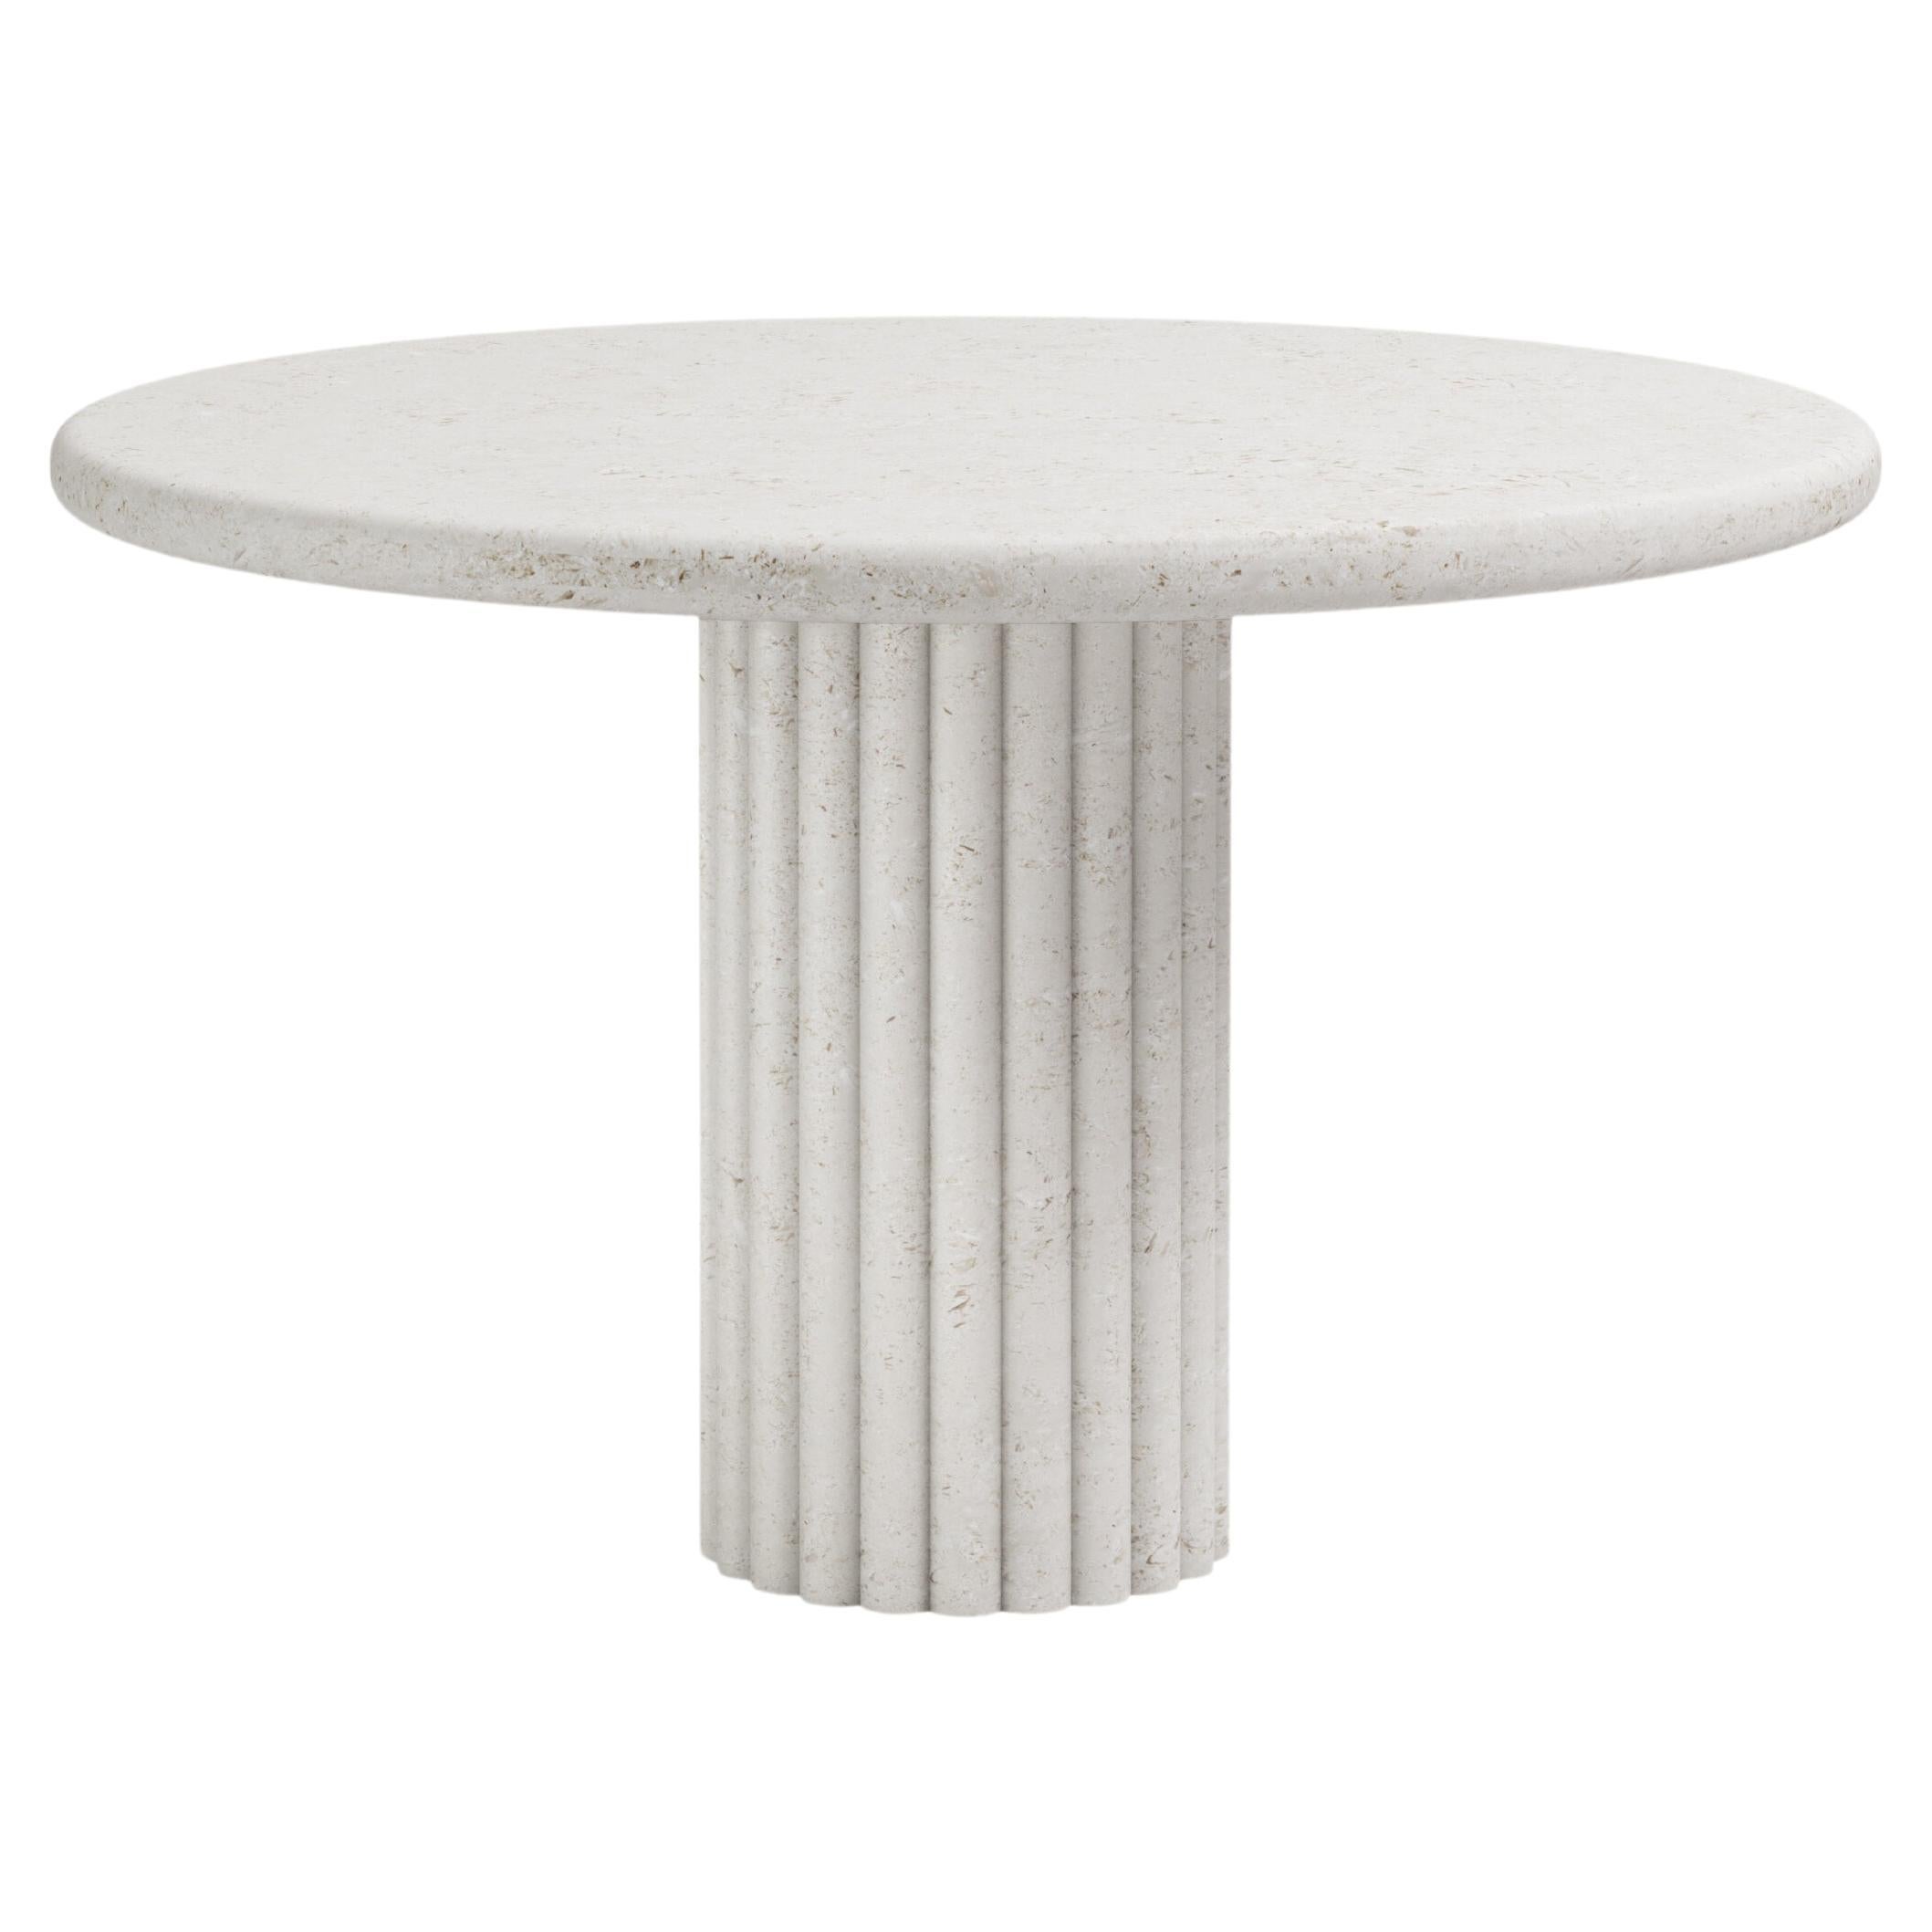 FORM(LA) Fluta Round Dining Table 60”L x 60”W x 30”H Limestone Oceano For Sale